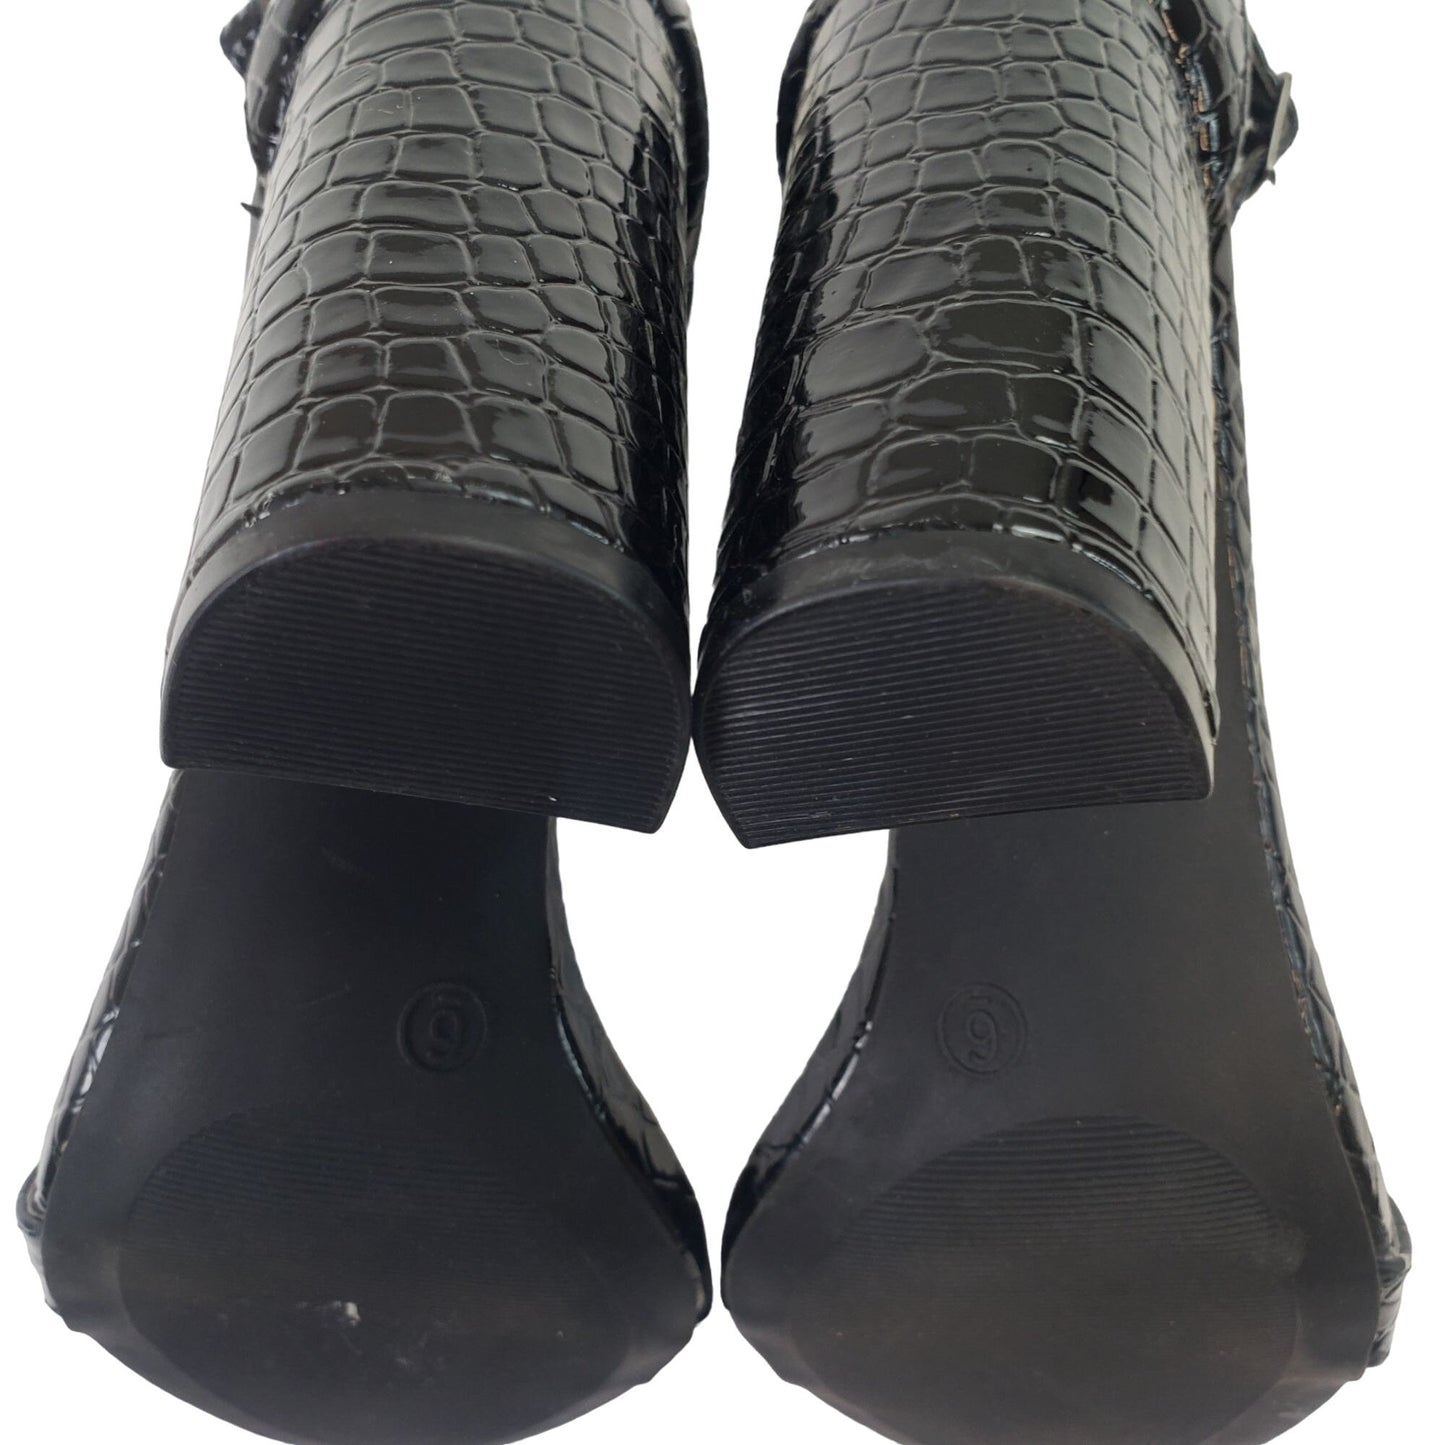 NWOT Lulu's Taylor Croc Block Heel Sandals Size 6